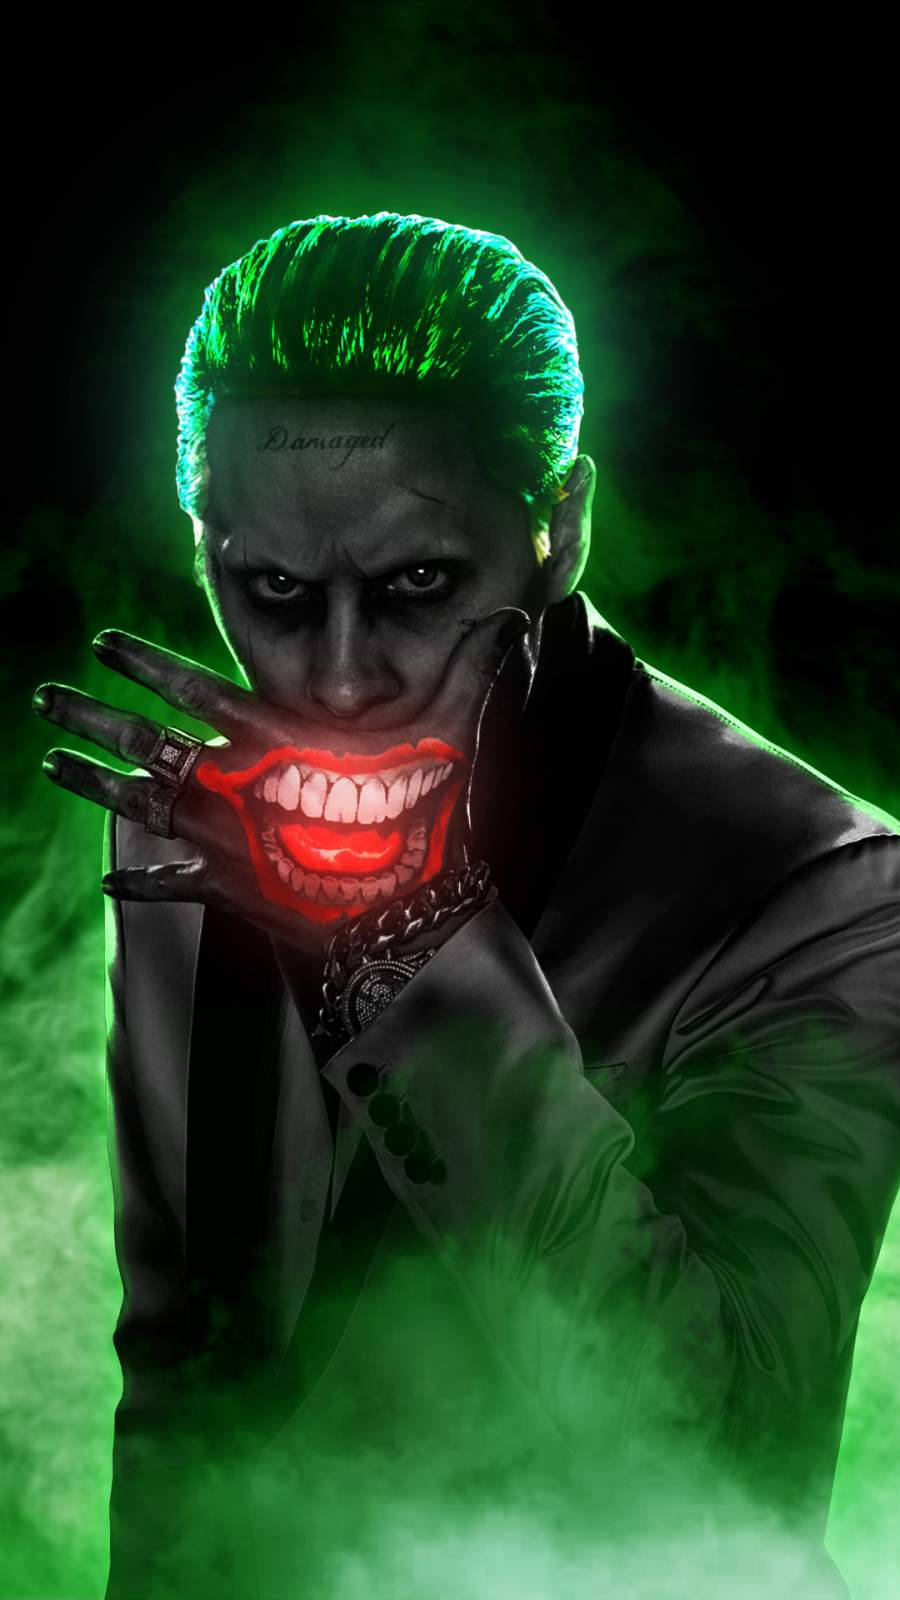 Caption: Captivating Green Joker Image For Iphone Background